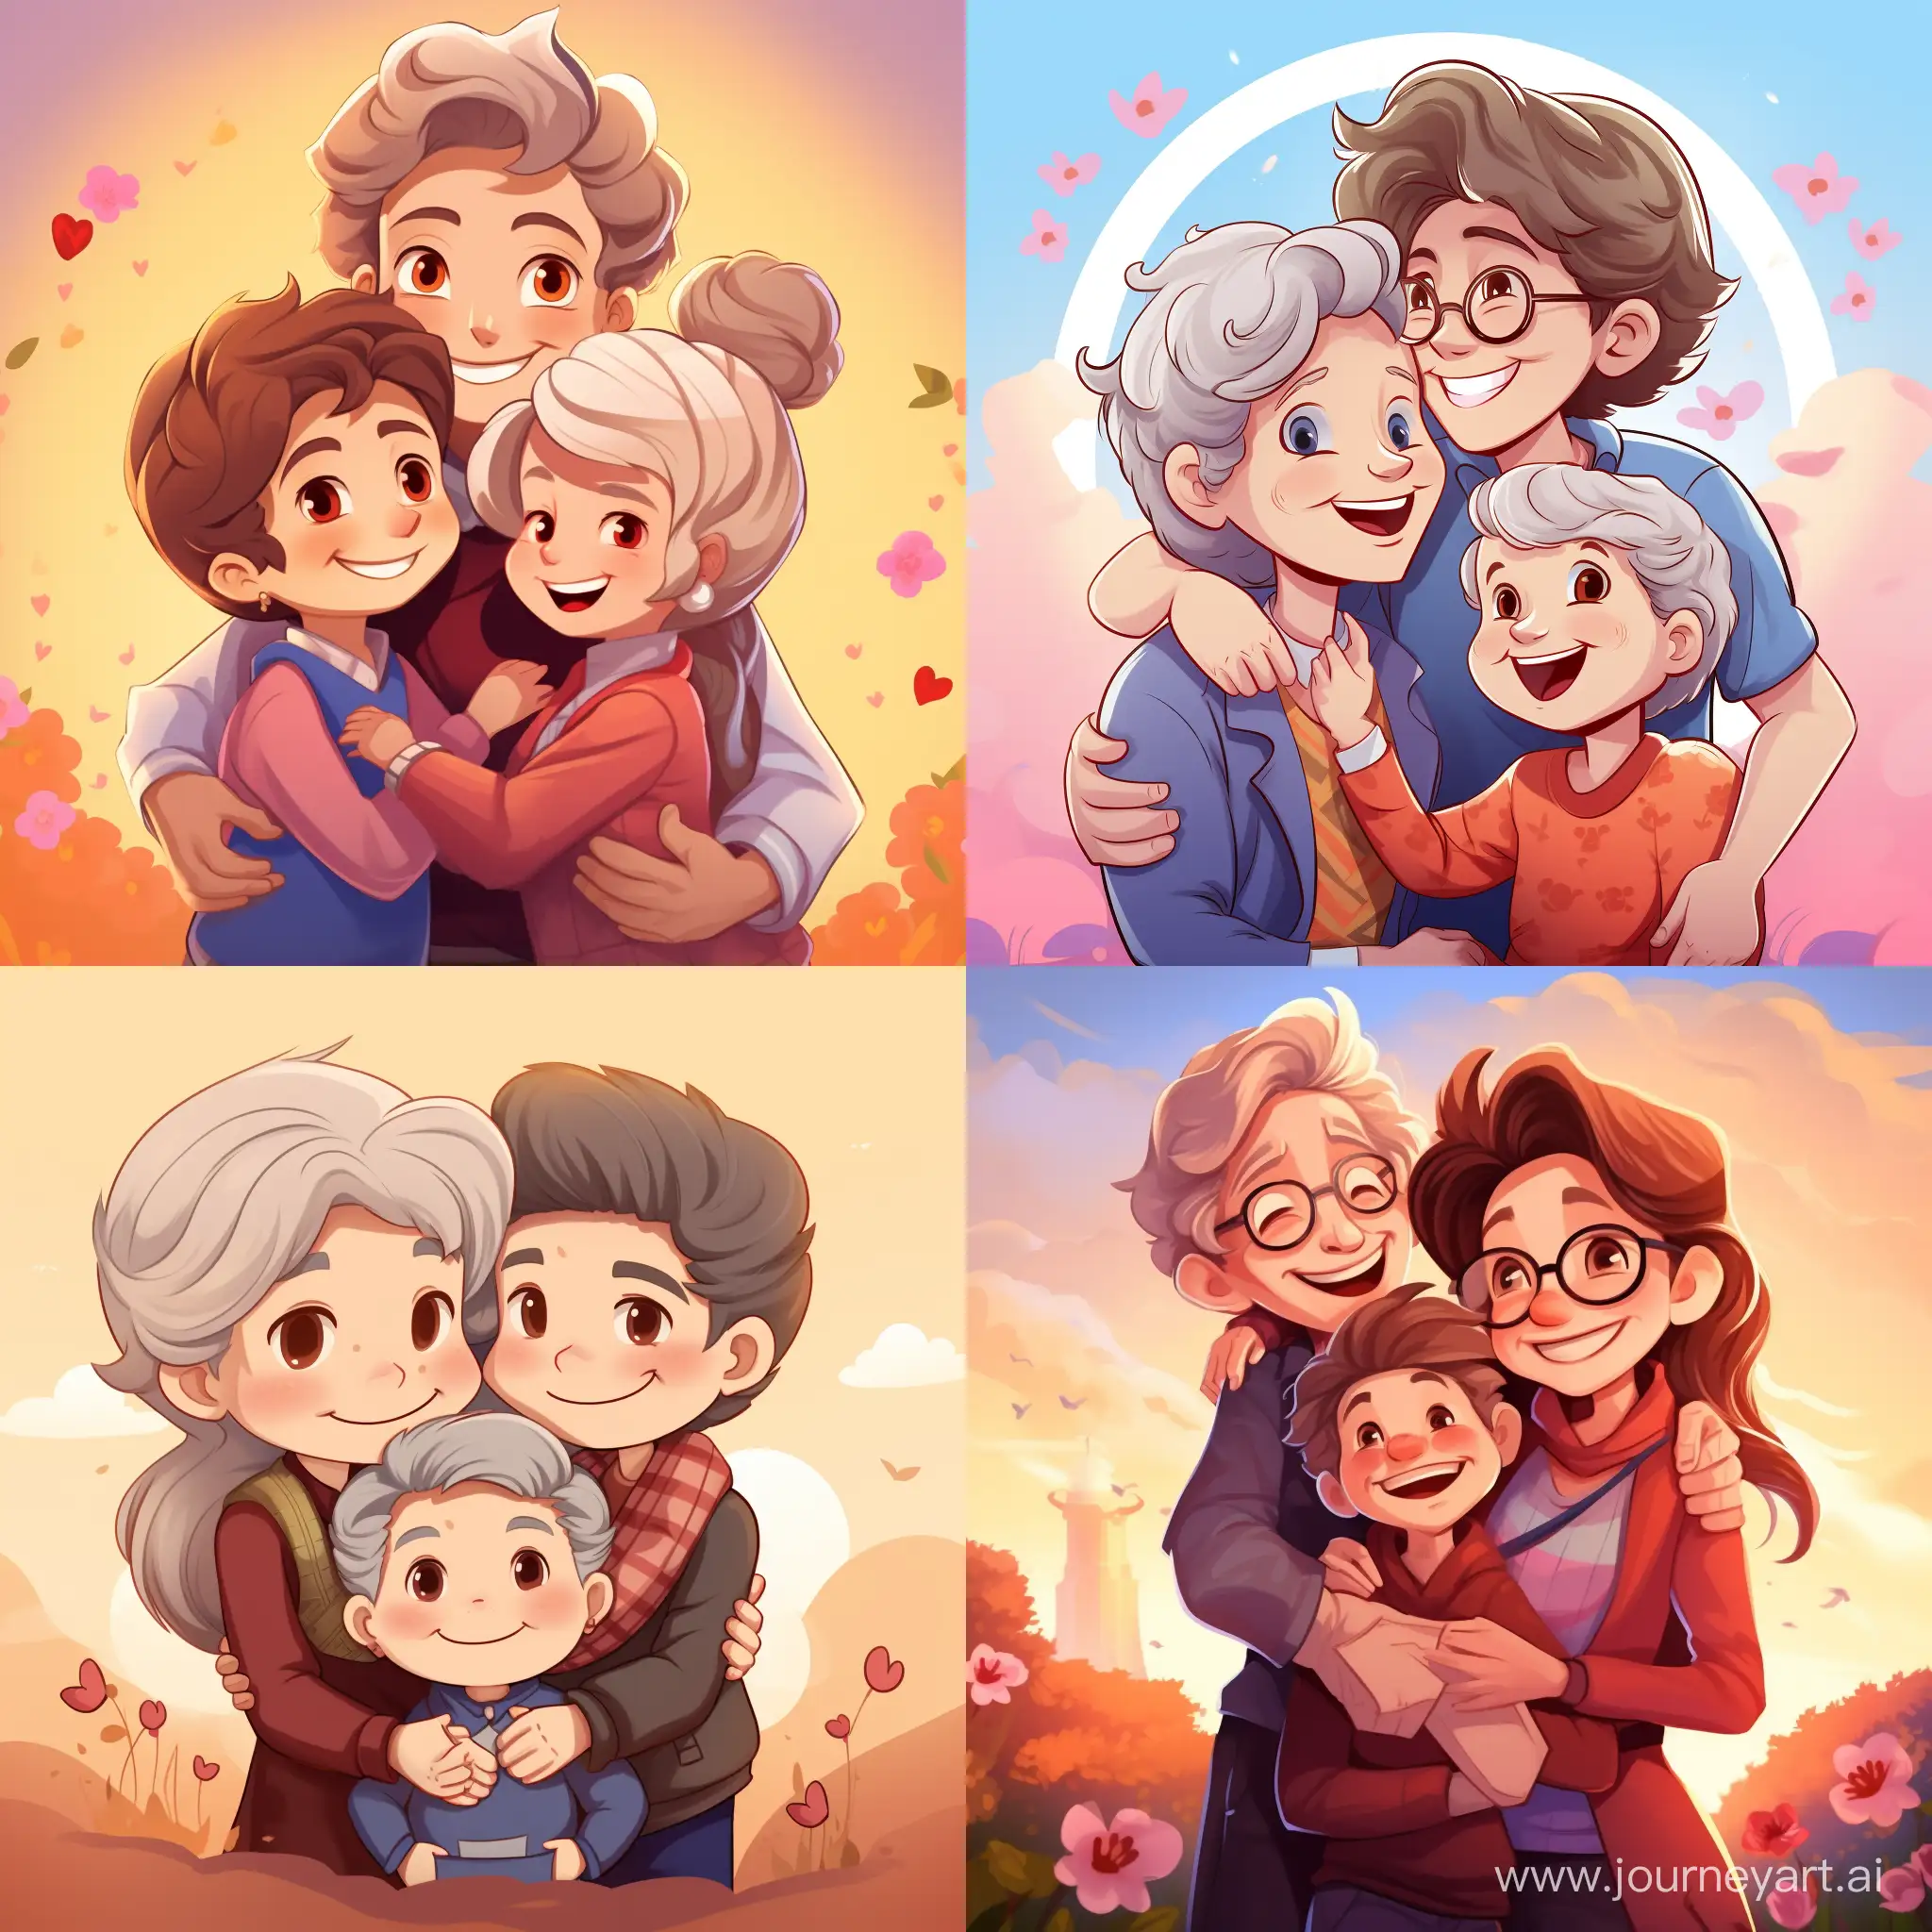 Heartwarming-Cartoon-Scene-Grandchildren-Embracing-Grandma-in-a-Loving-Hug